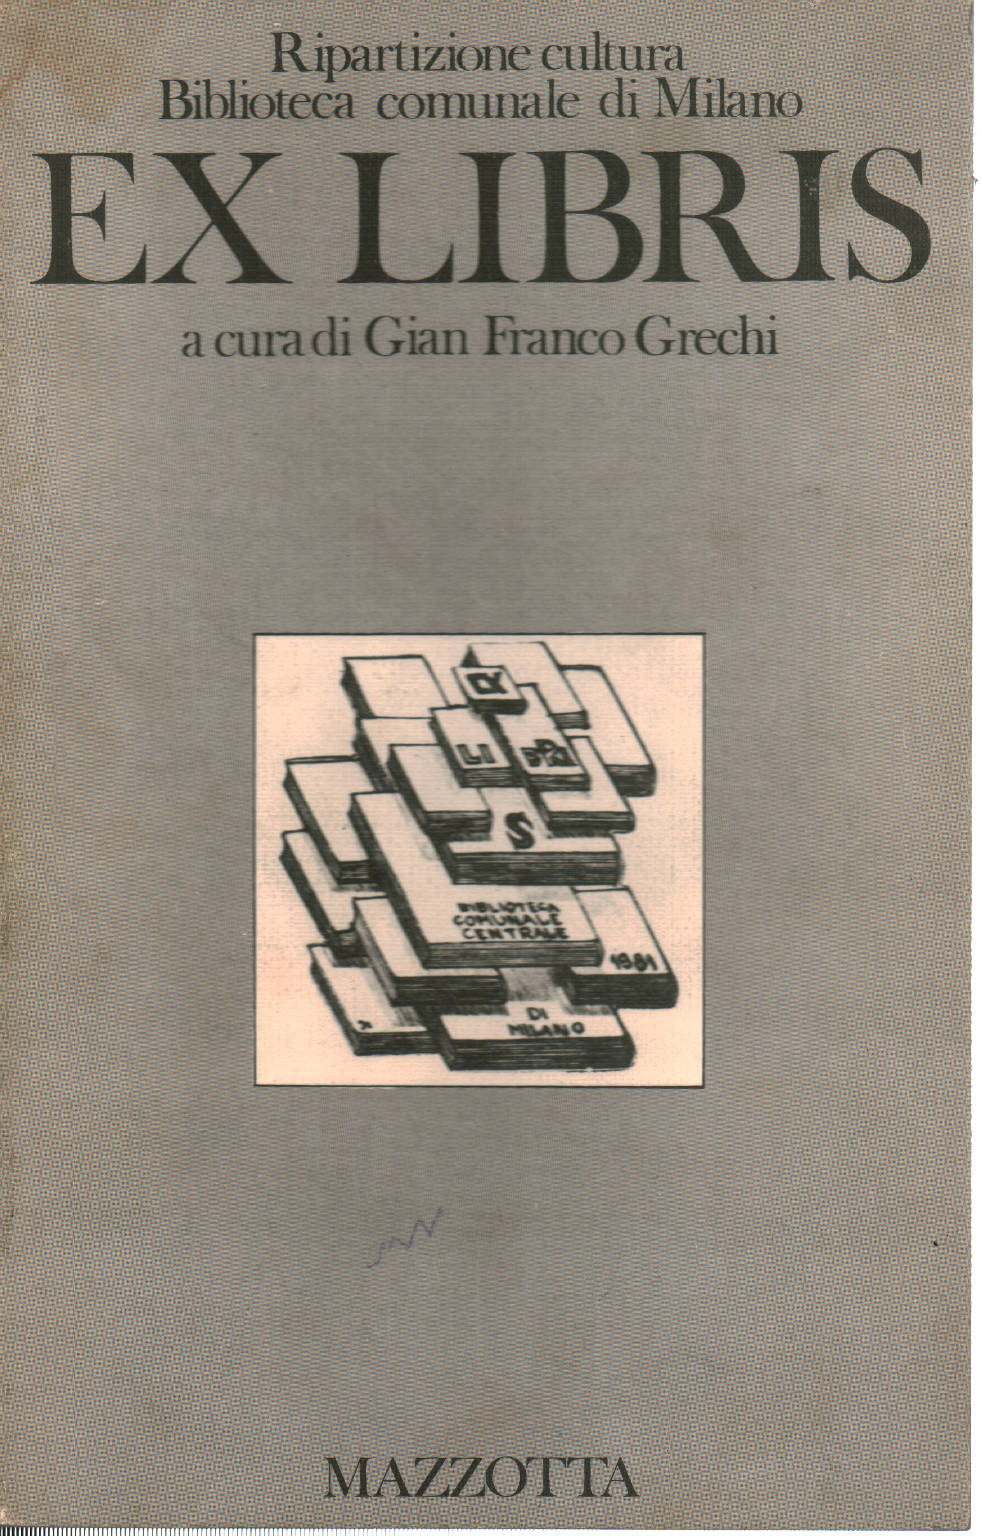 Ex libris, Gian Franco Grechi